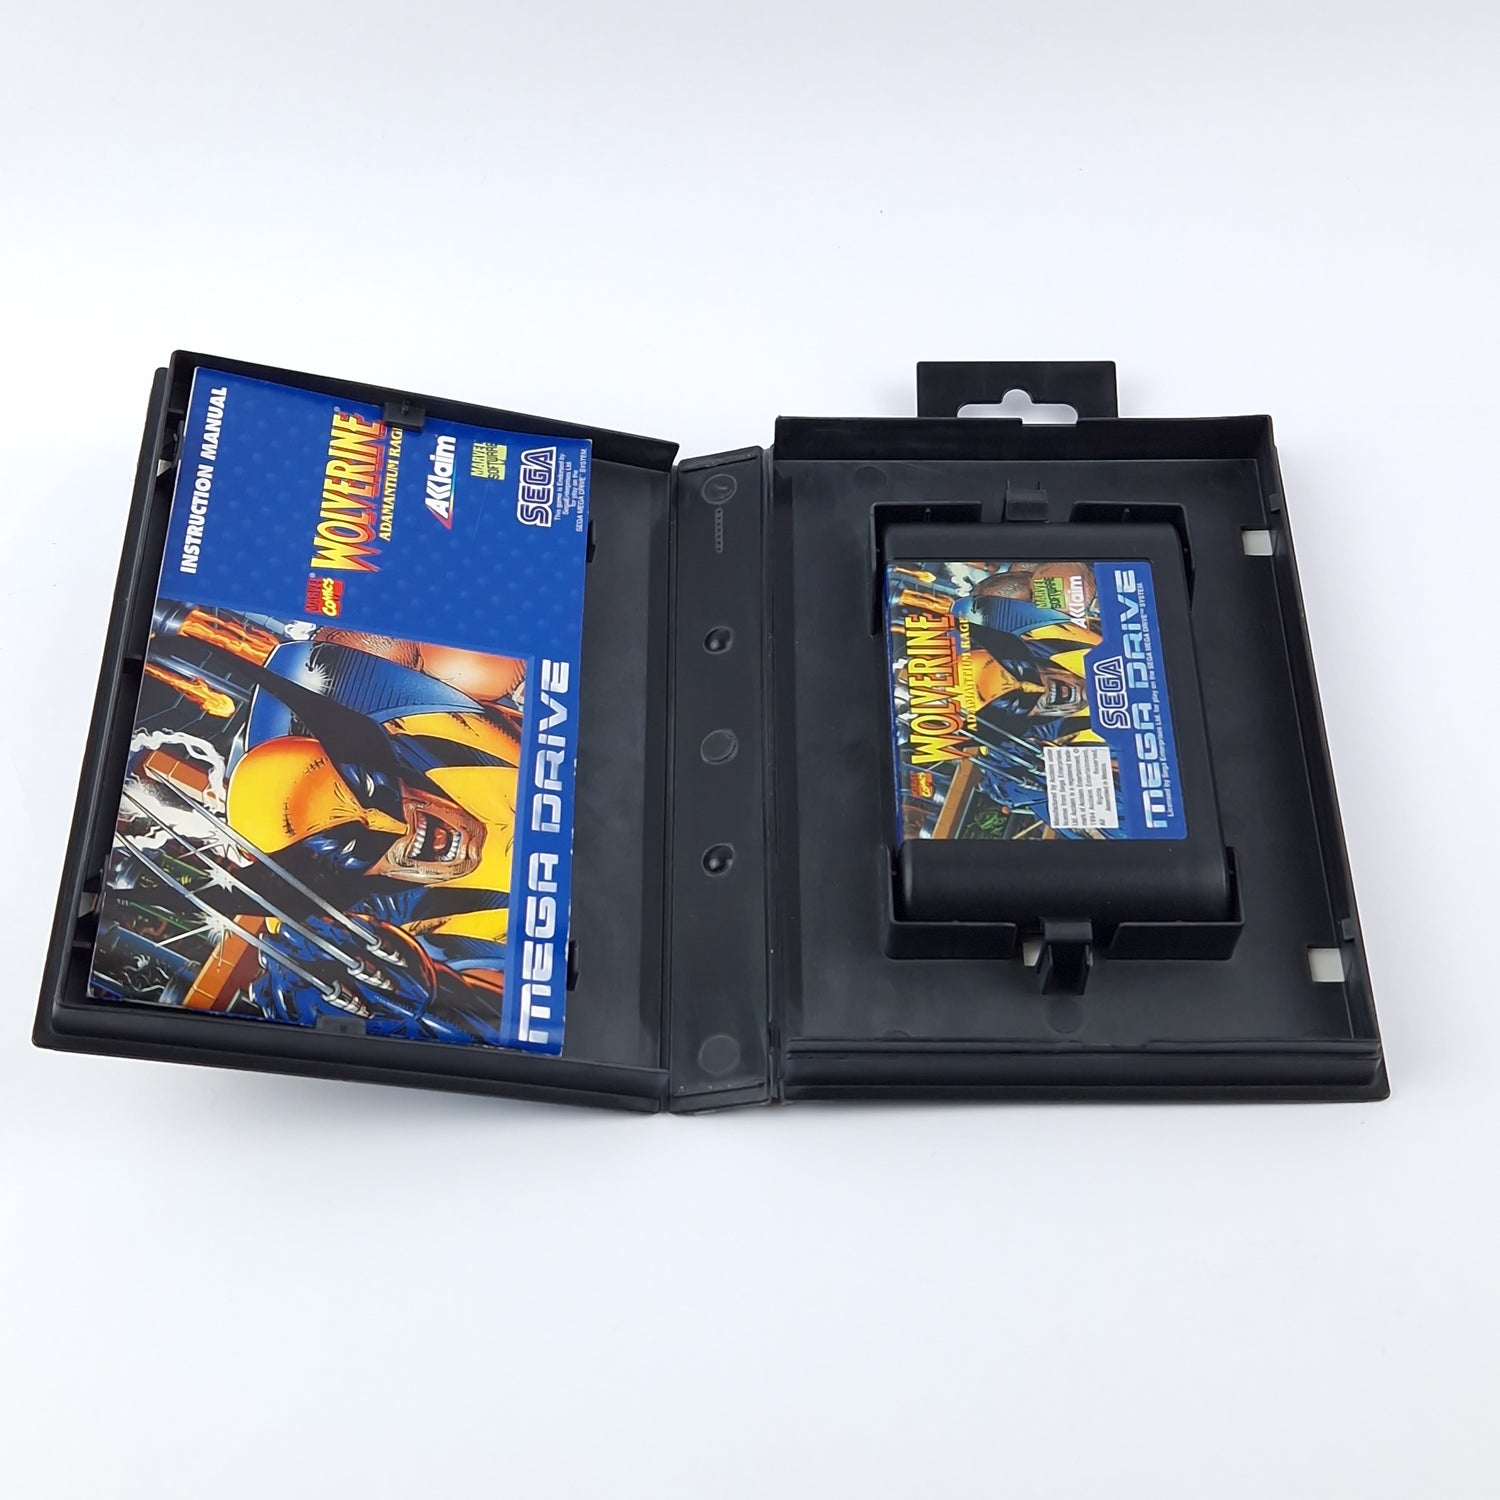 Sega Mega Drive Spiel : Wolverine Adamantium Rage - OVP Anleitung Modul | MD PAL